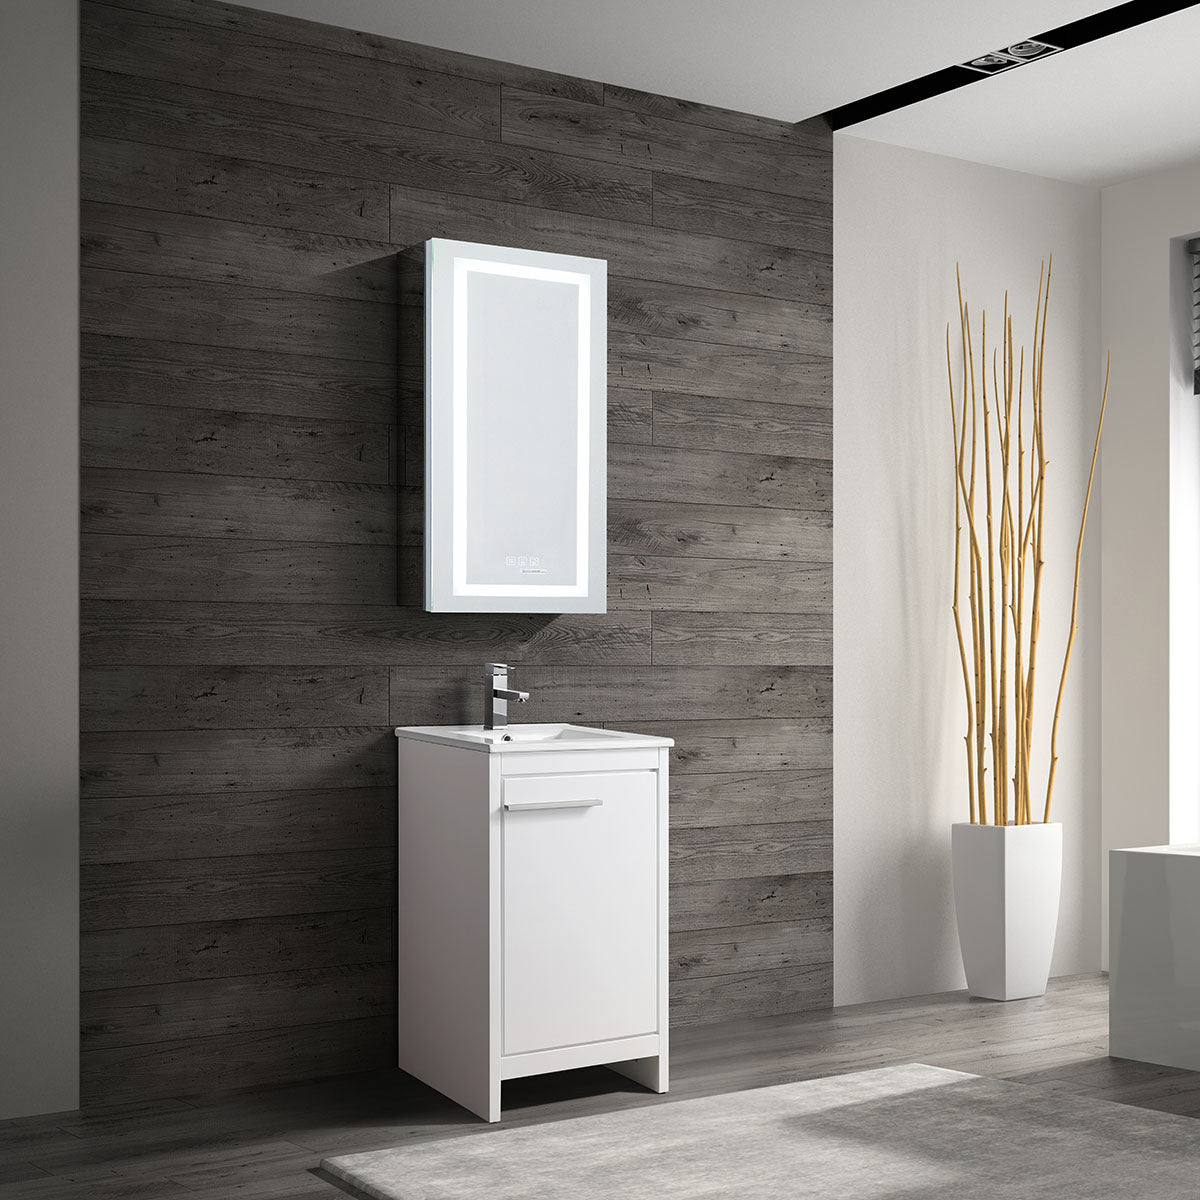 20" Vanity with Ceramic Sink (Glossy White) V9004 Series - iStyle Bath